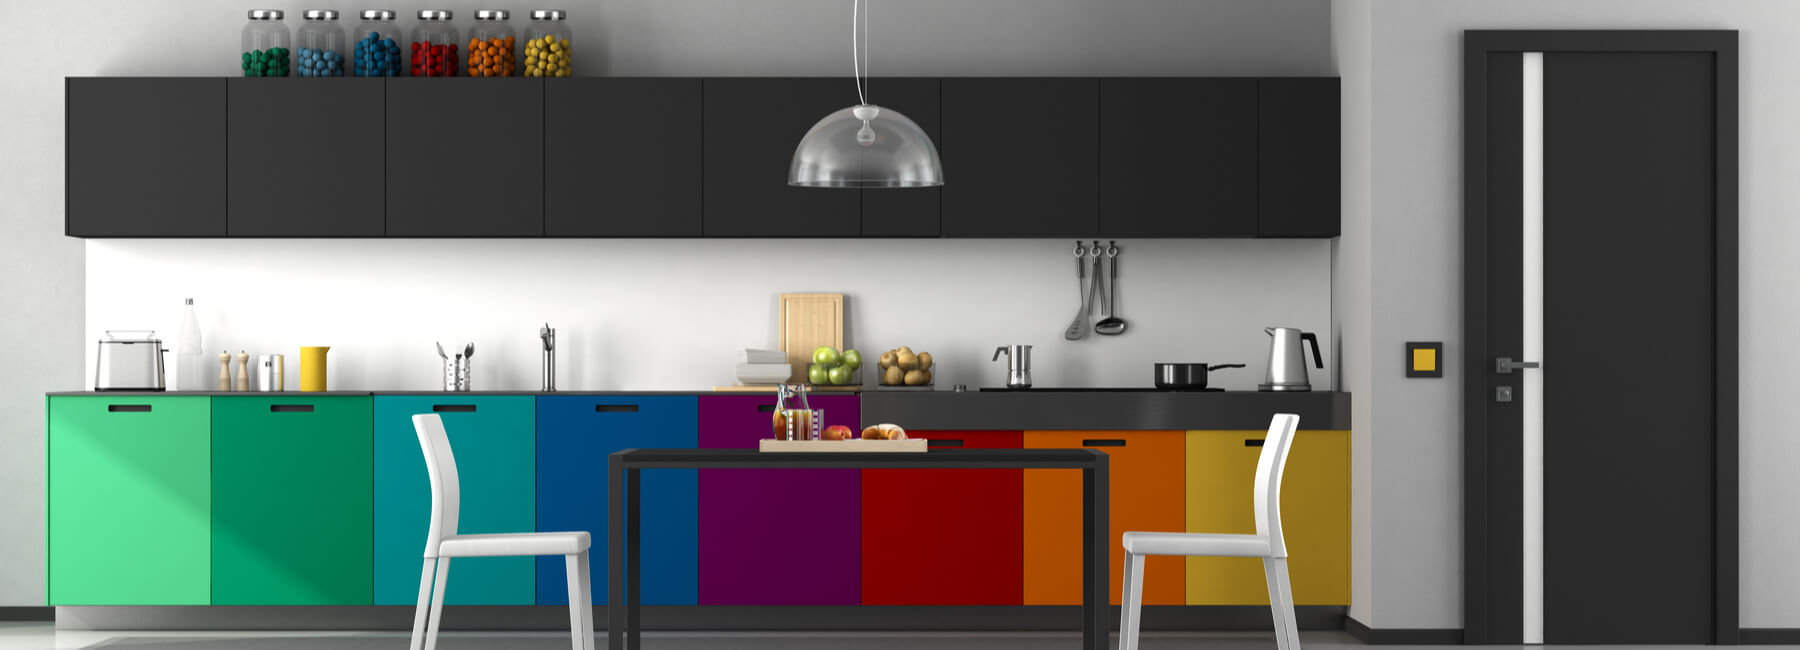 colourful modern kitchen